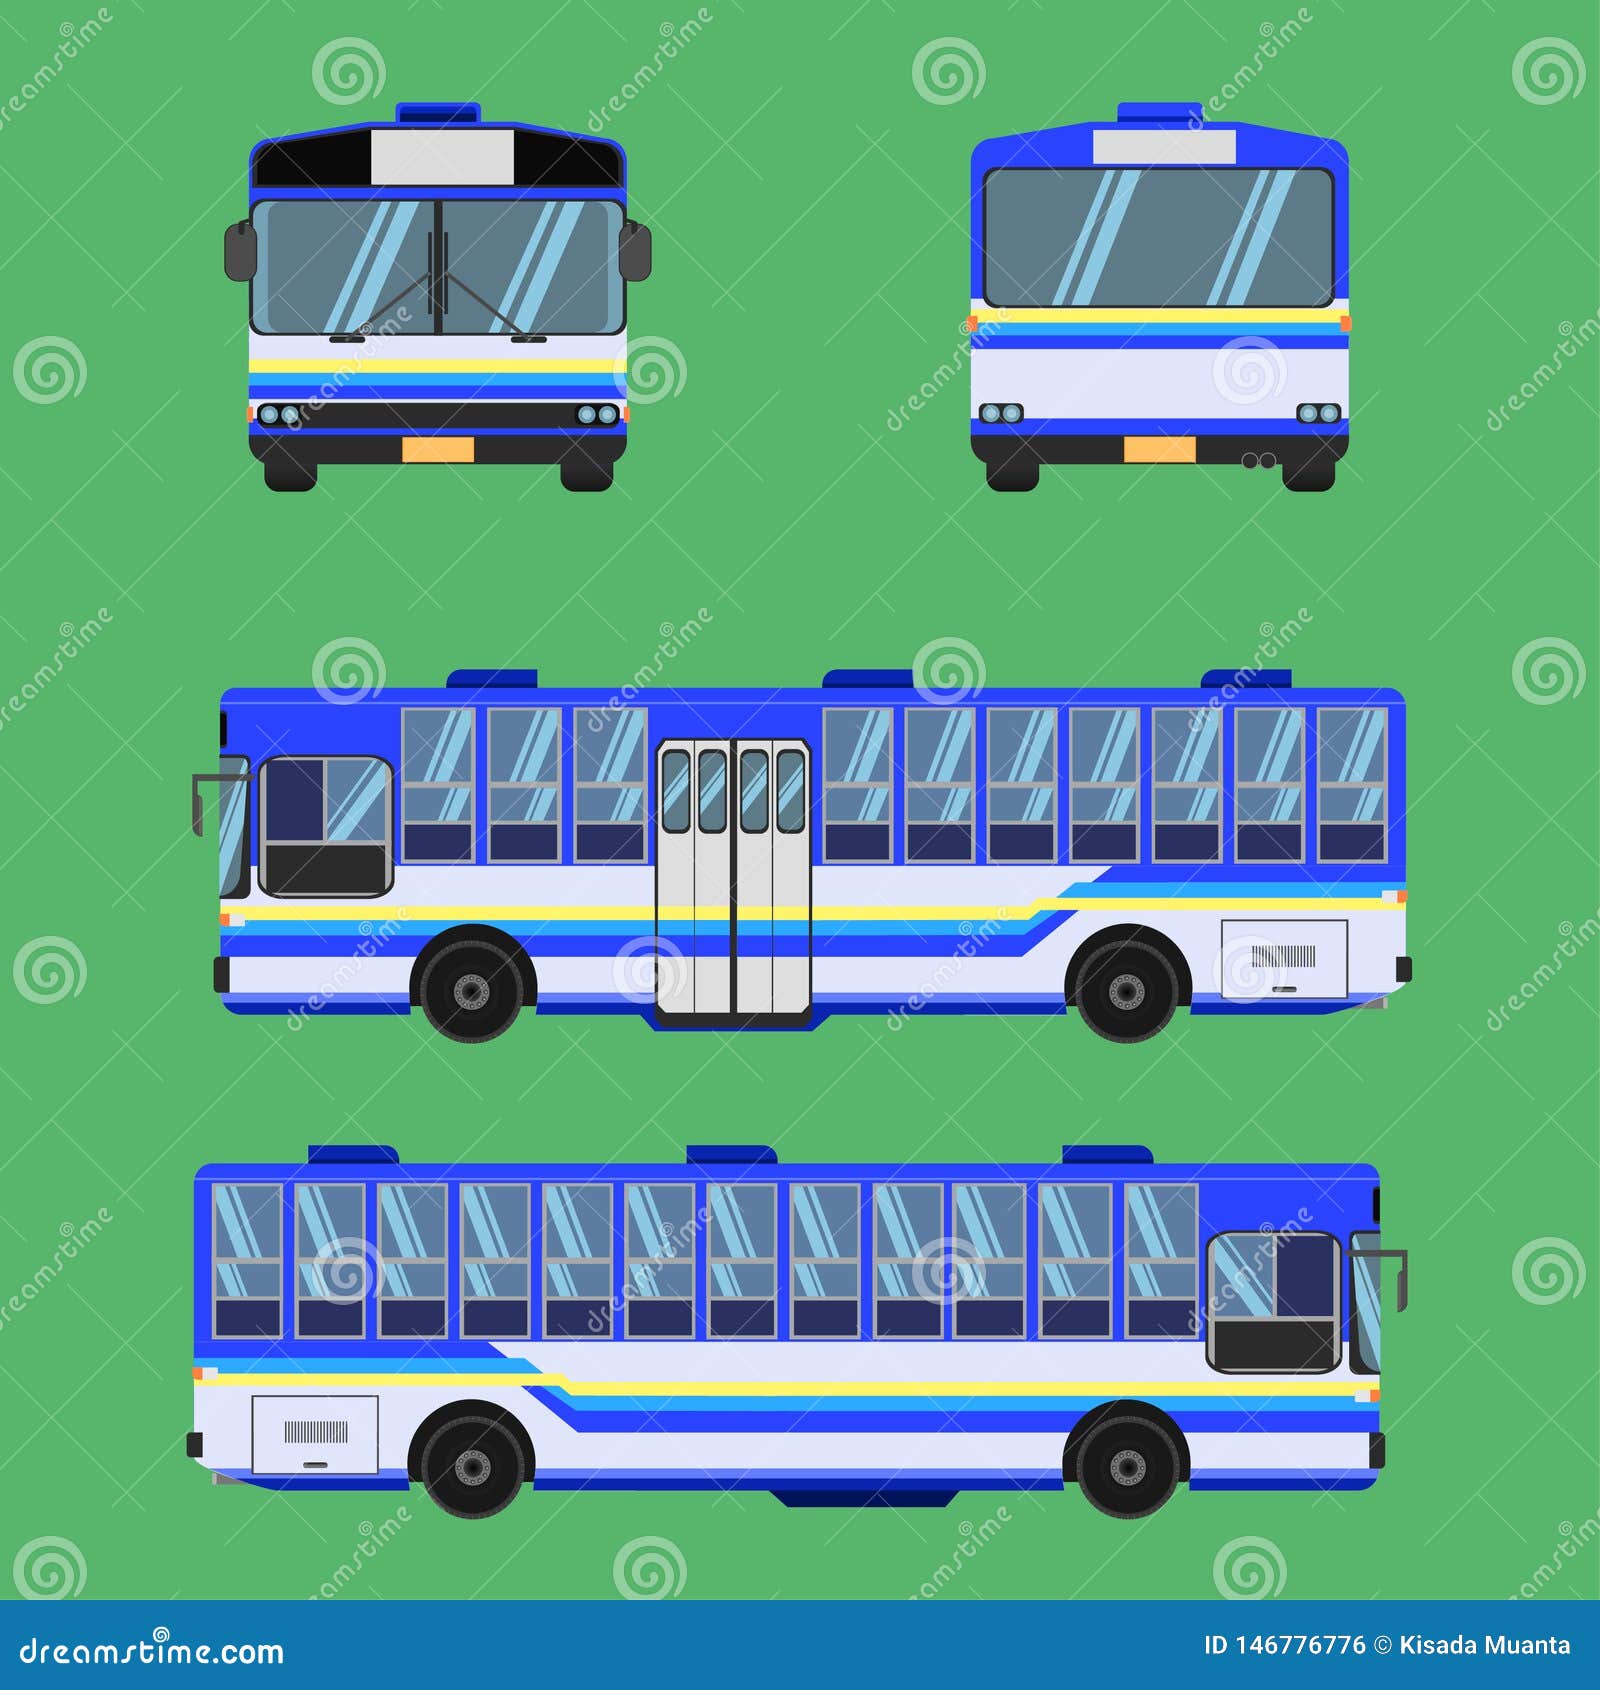 https://thumbs.dreamstime.com/z/thai-bus-blau-himmel-gelb-wei%C3%9F-transport-auto-fahrer-autobus-omnibus-schiene-bank-stuhl-hocker-sessel-sitz-matratze-polster-146776776.jpg